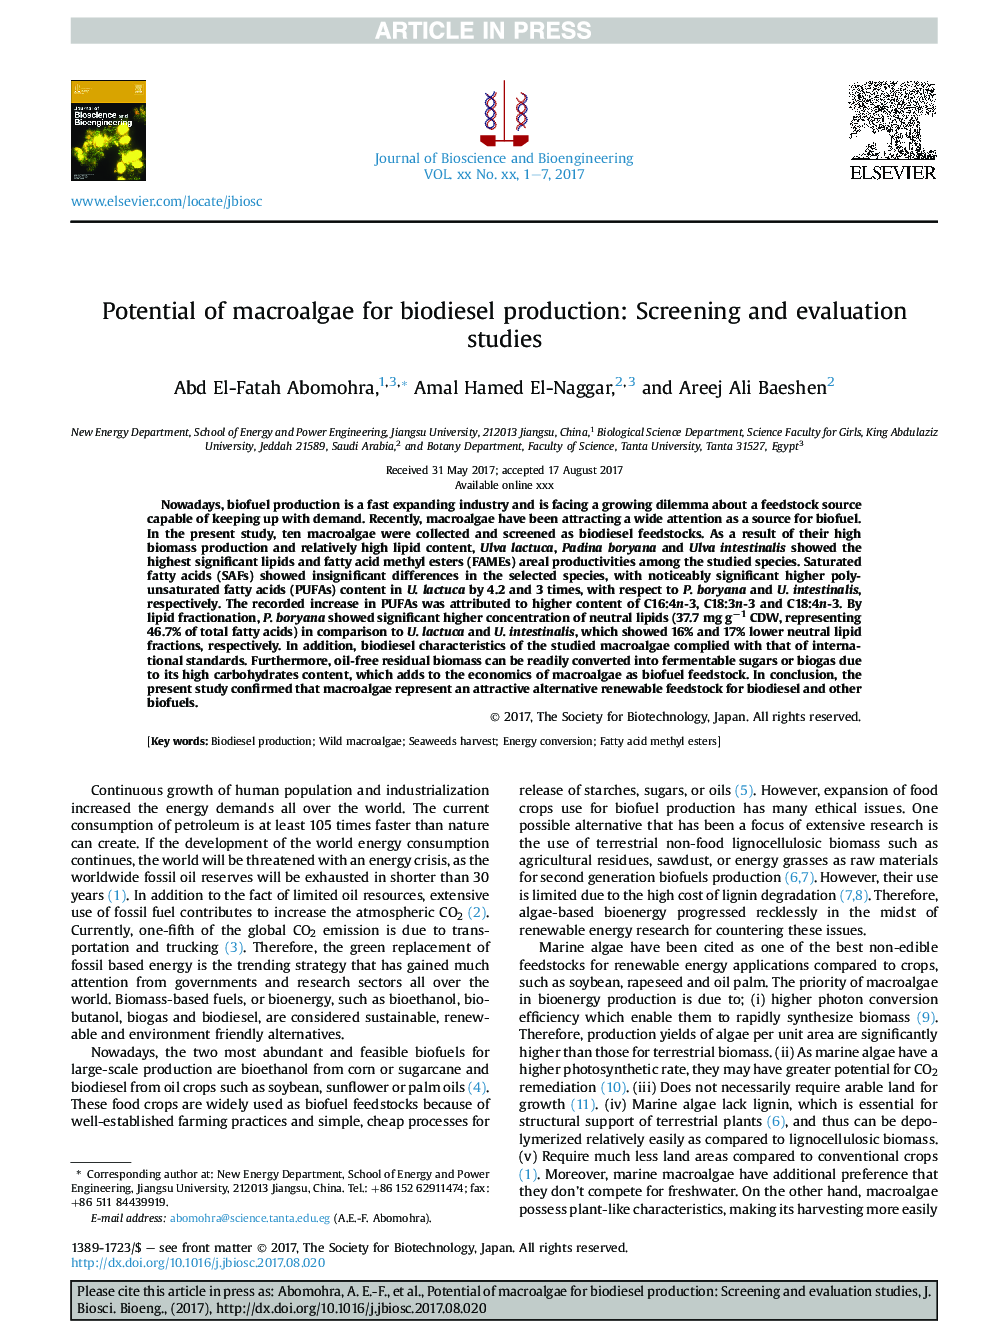 Potential of macroalgae for biodiesel production: Screening and evaluation studies